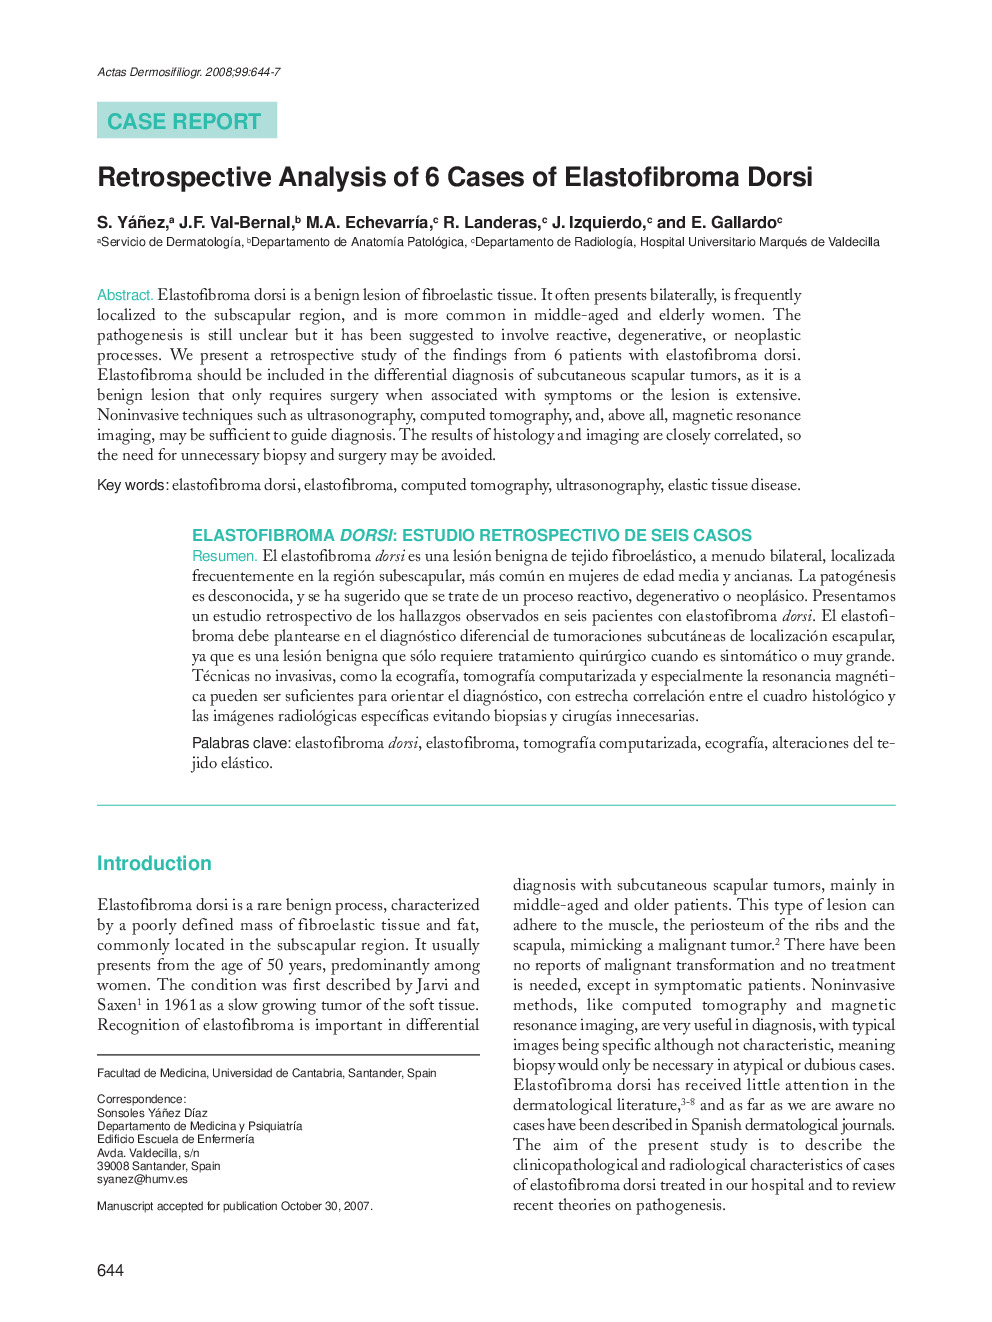 Retrospective Analysis of 6 Cases of Elastofibroma Dorsi